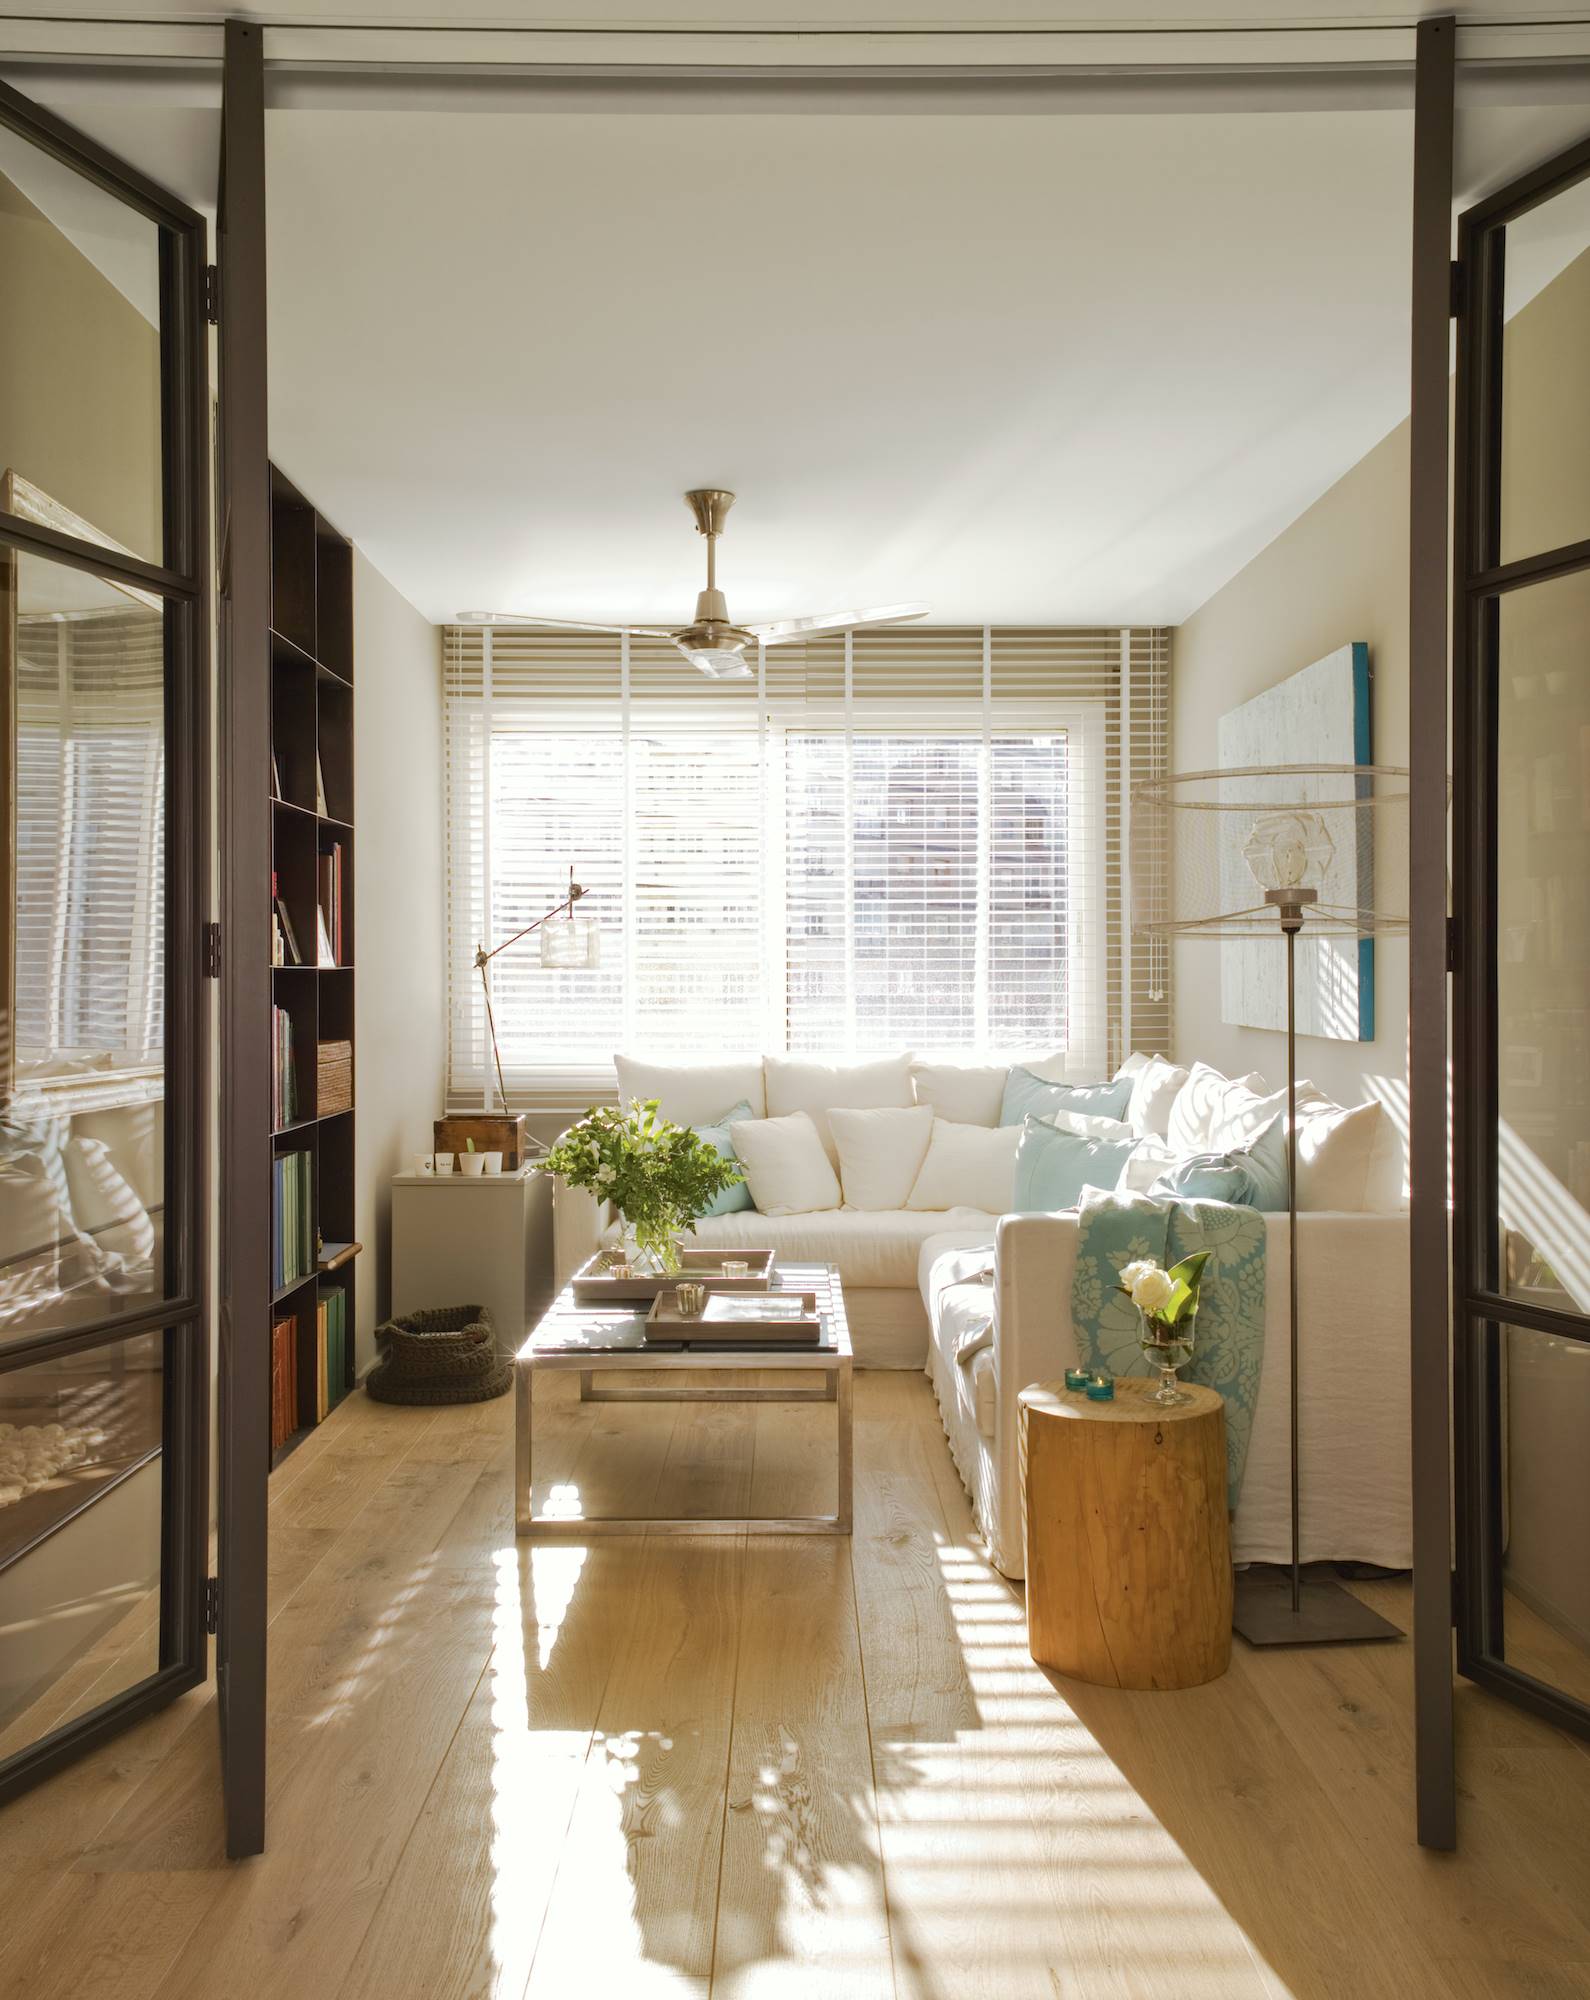 Salón con ventana con persiana, sofá, mesita de noche tipo tronco, estantería y puertas de cristal oscuras.